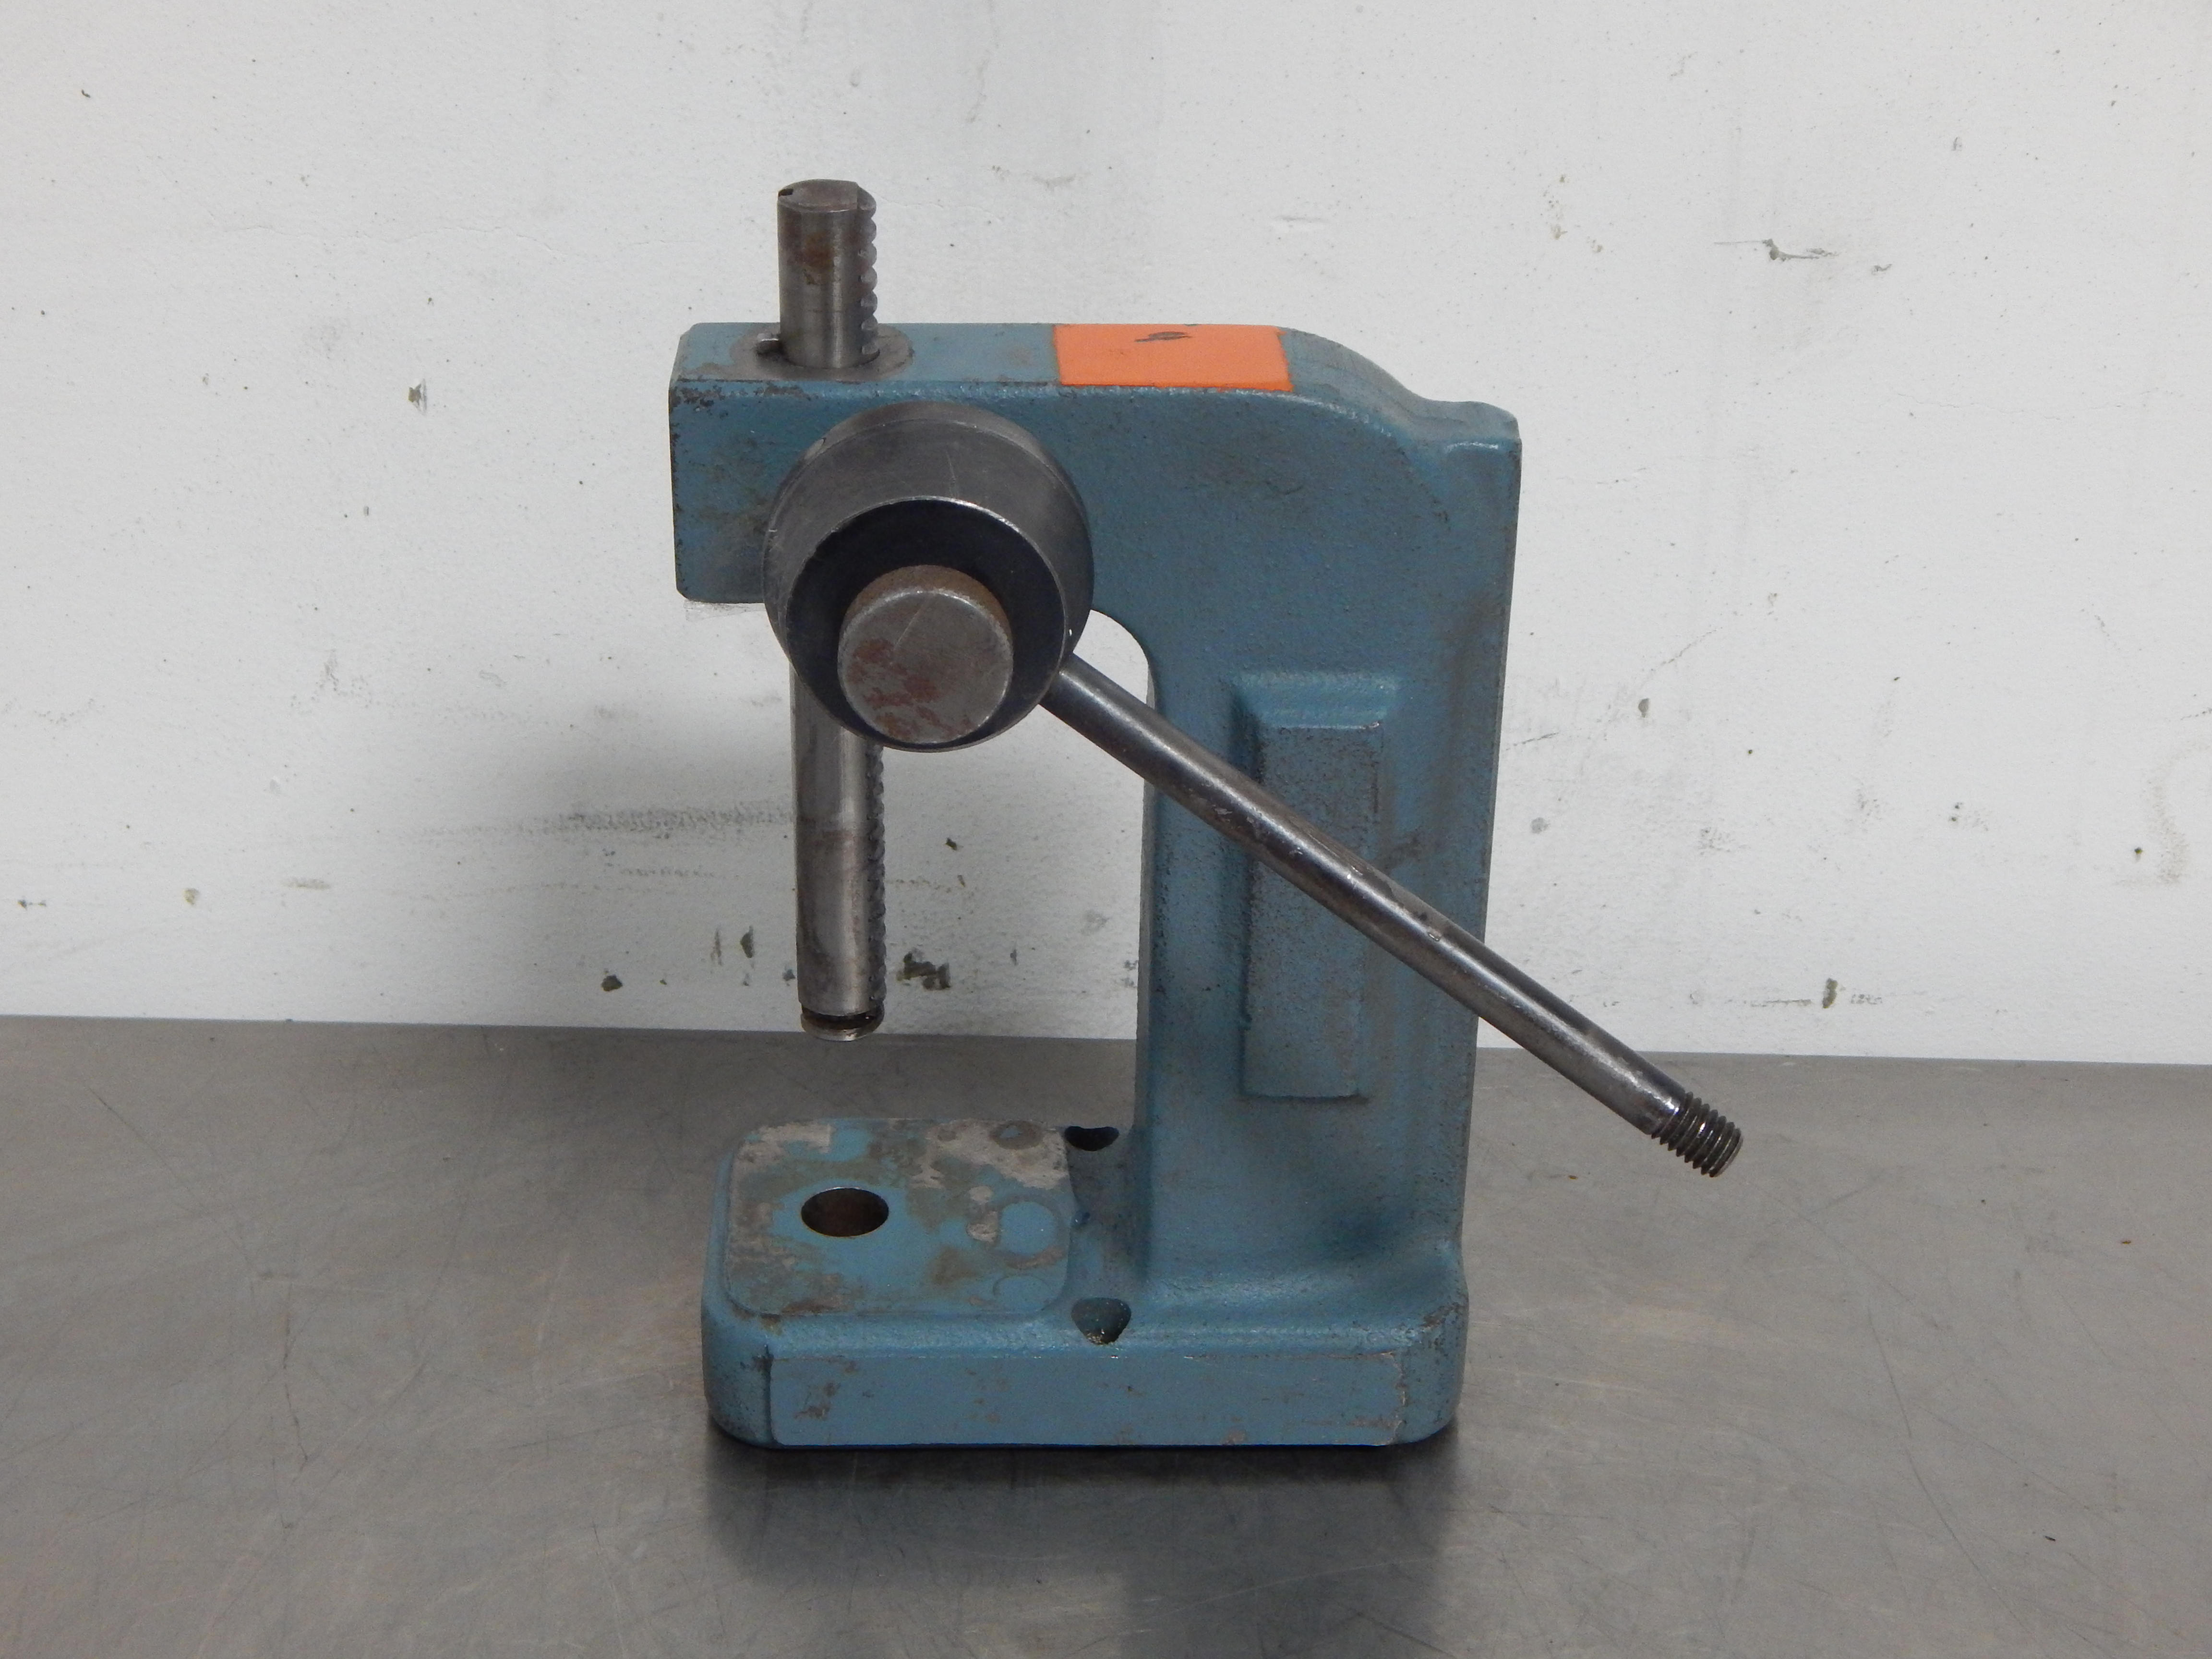 ILP-500, 6 stroke, 1.75 throat depth, 1/2 ton manual arbor press, Made  in USA